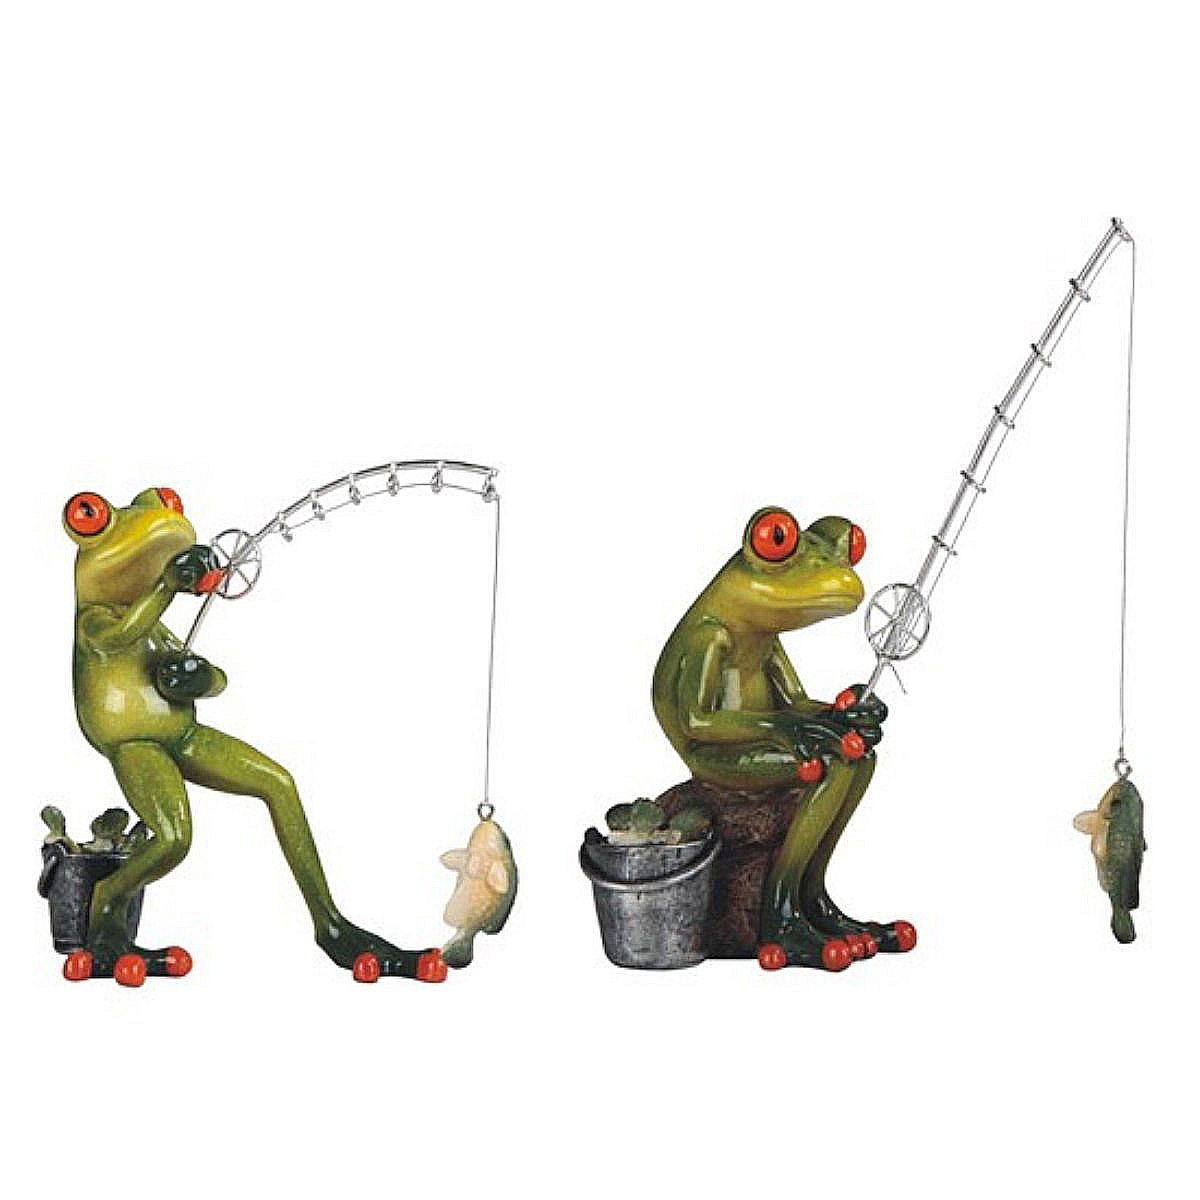 https://www.joewilcoxsedona.com/wp-content/uploads/2022/10/Fishing-Frog-Figurines.jpg